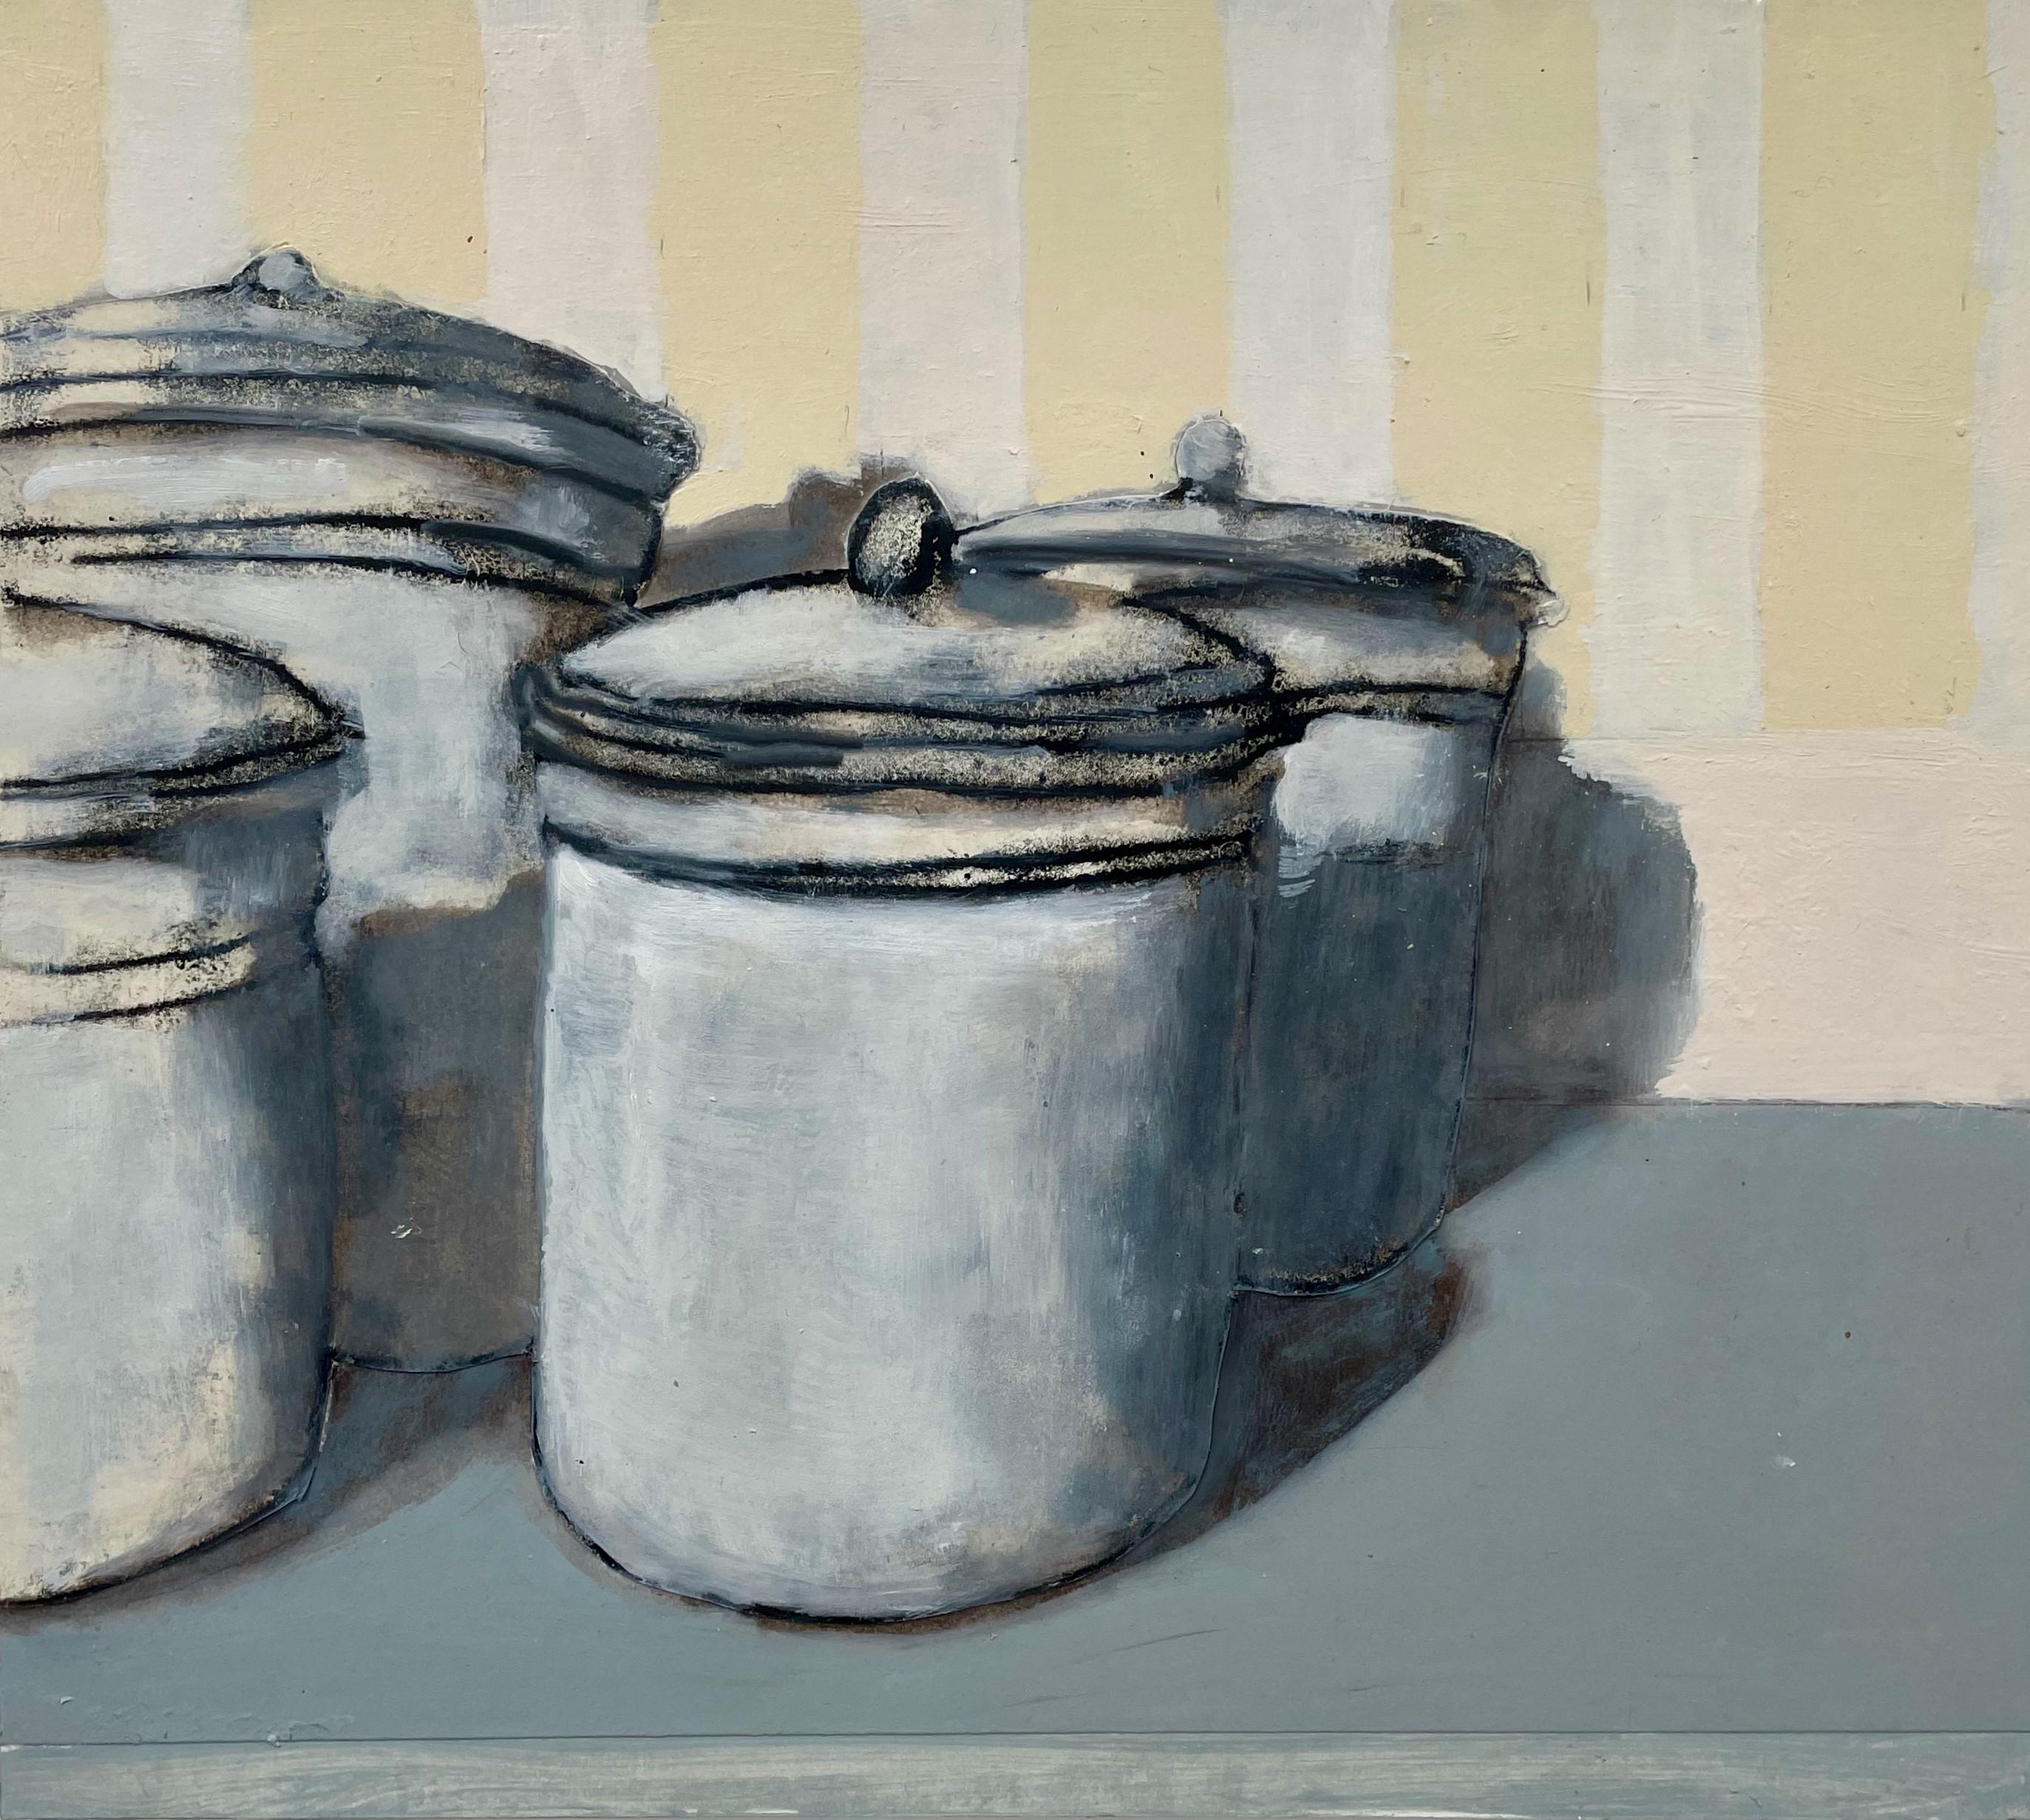 Flour, Sugar, Cornmeal, Tea (Contemporary Still Life Painting of Kitchen Jars) - Mixed Media Art by David Konigsberg